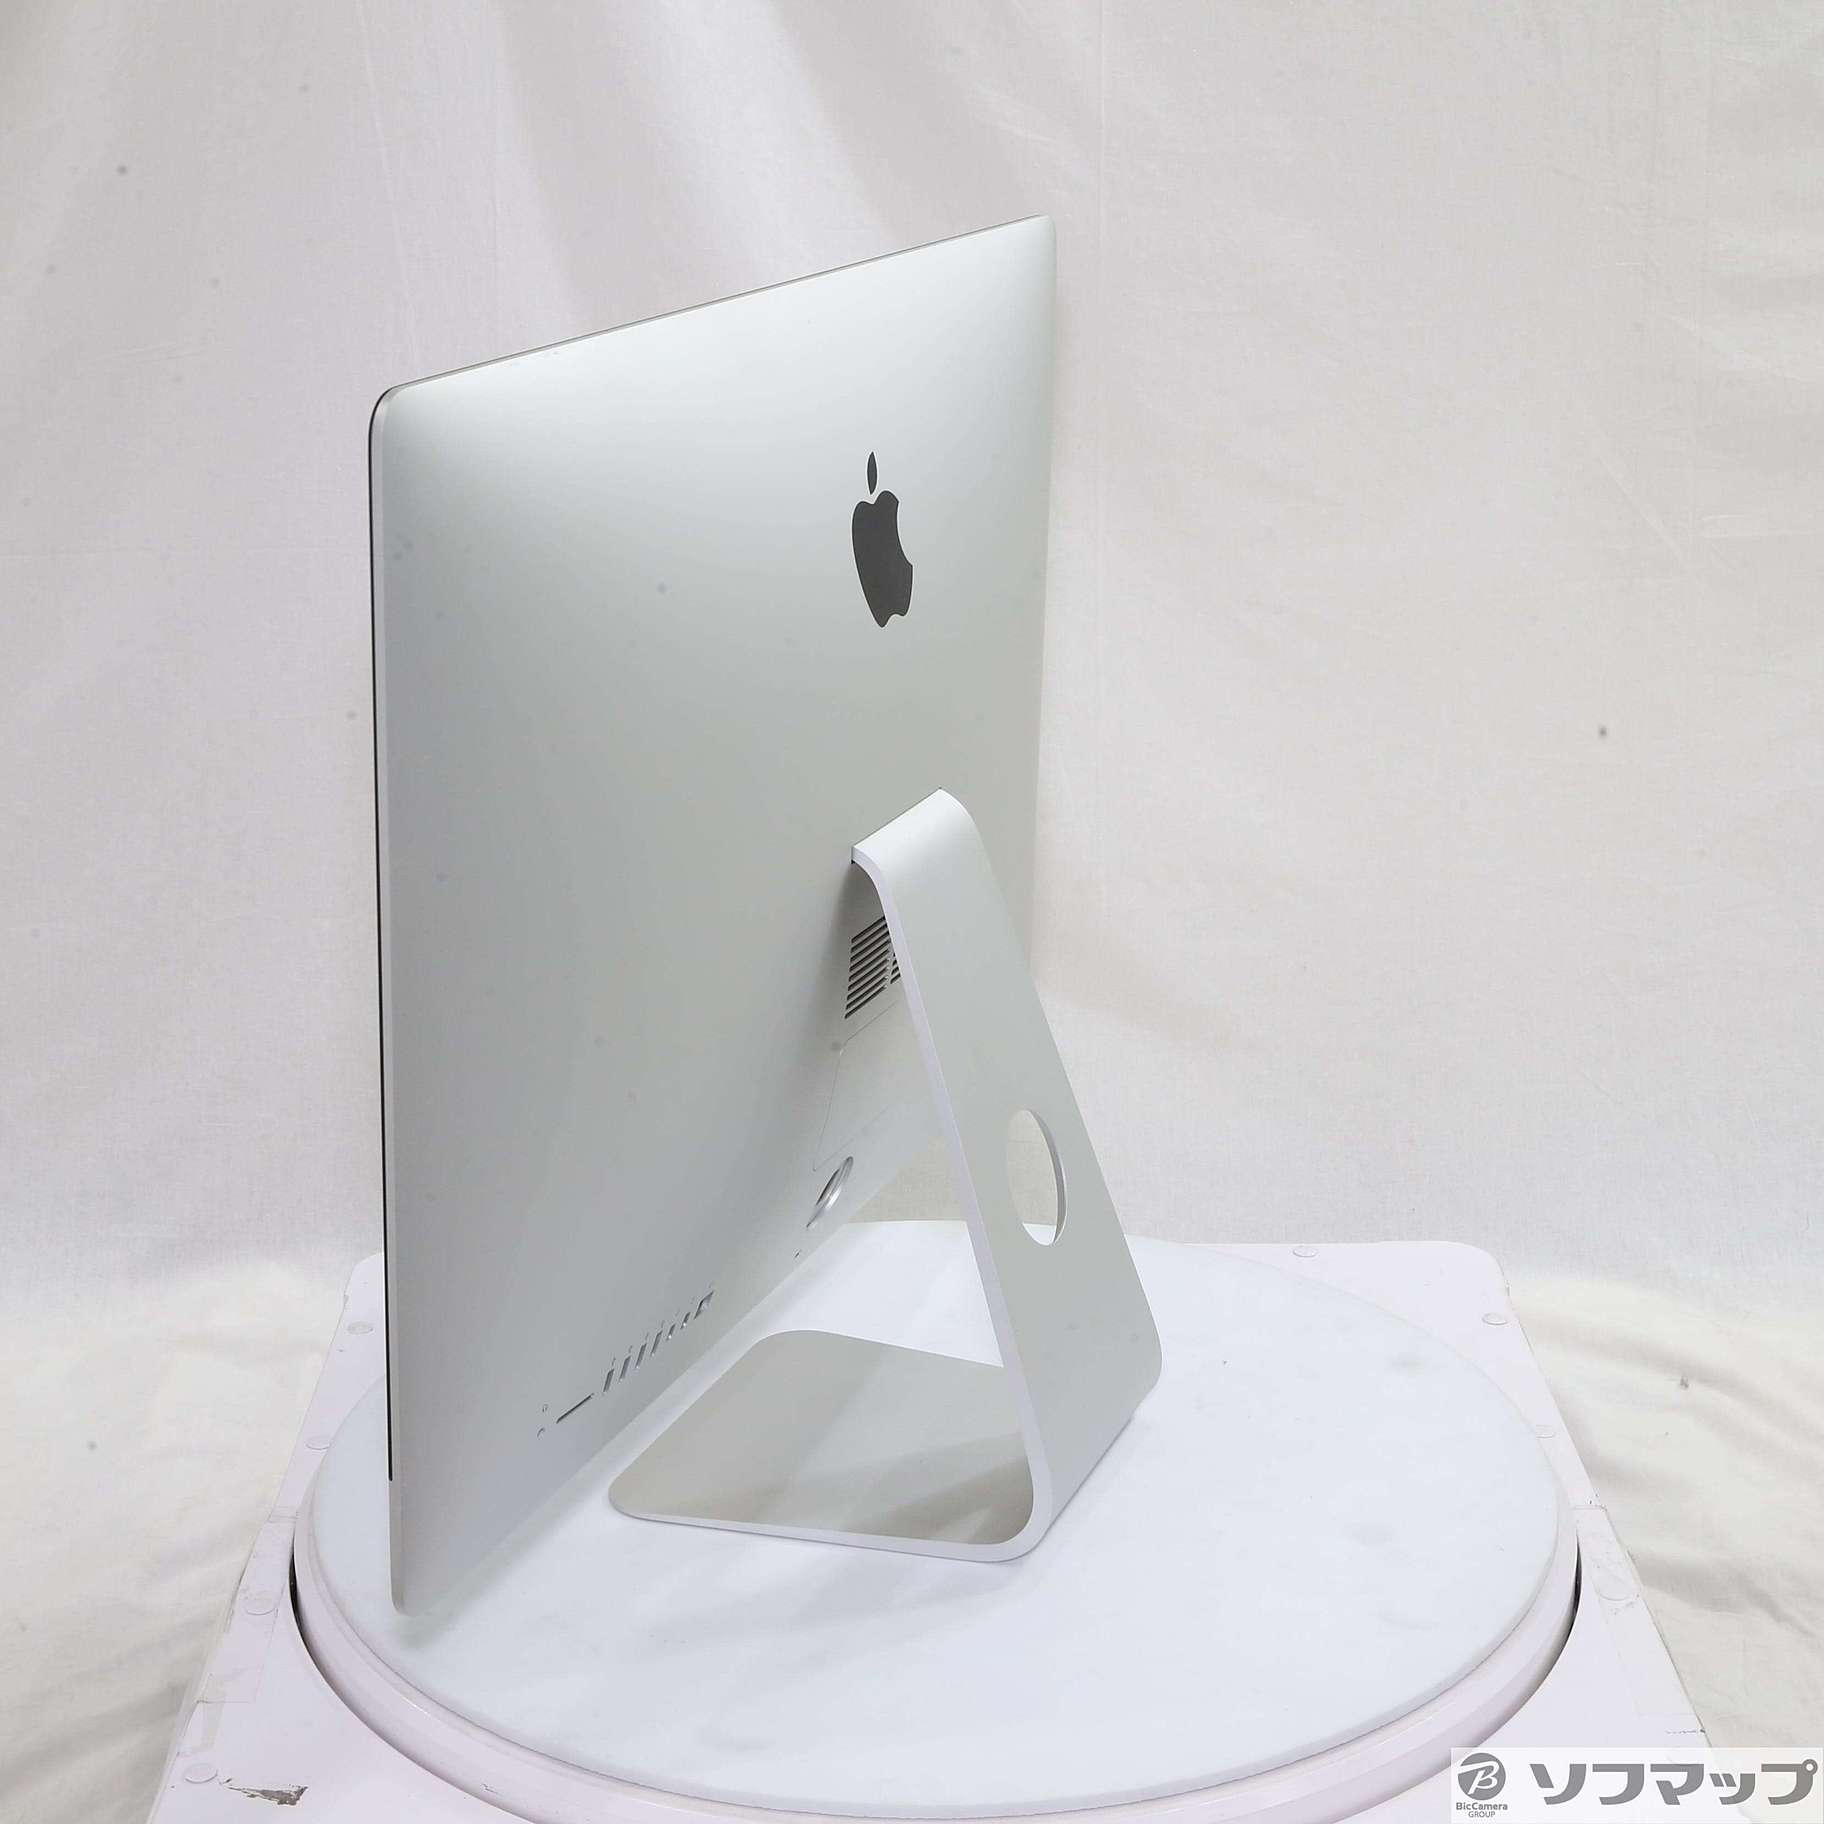 iMac 27inch late2012 32GB catalina